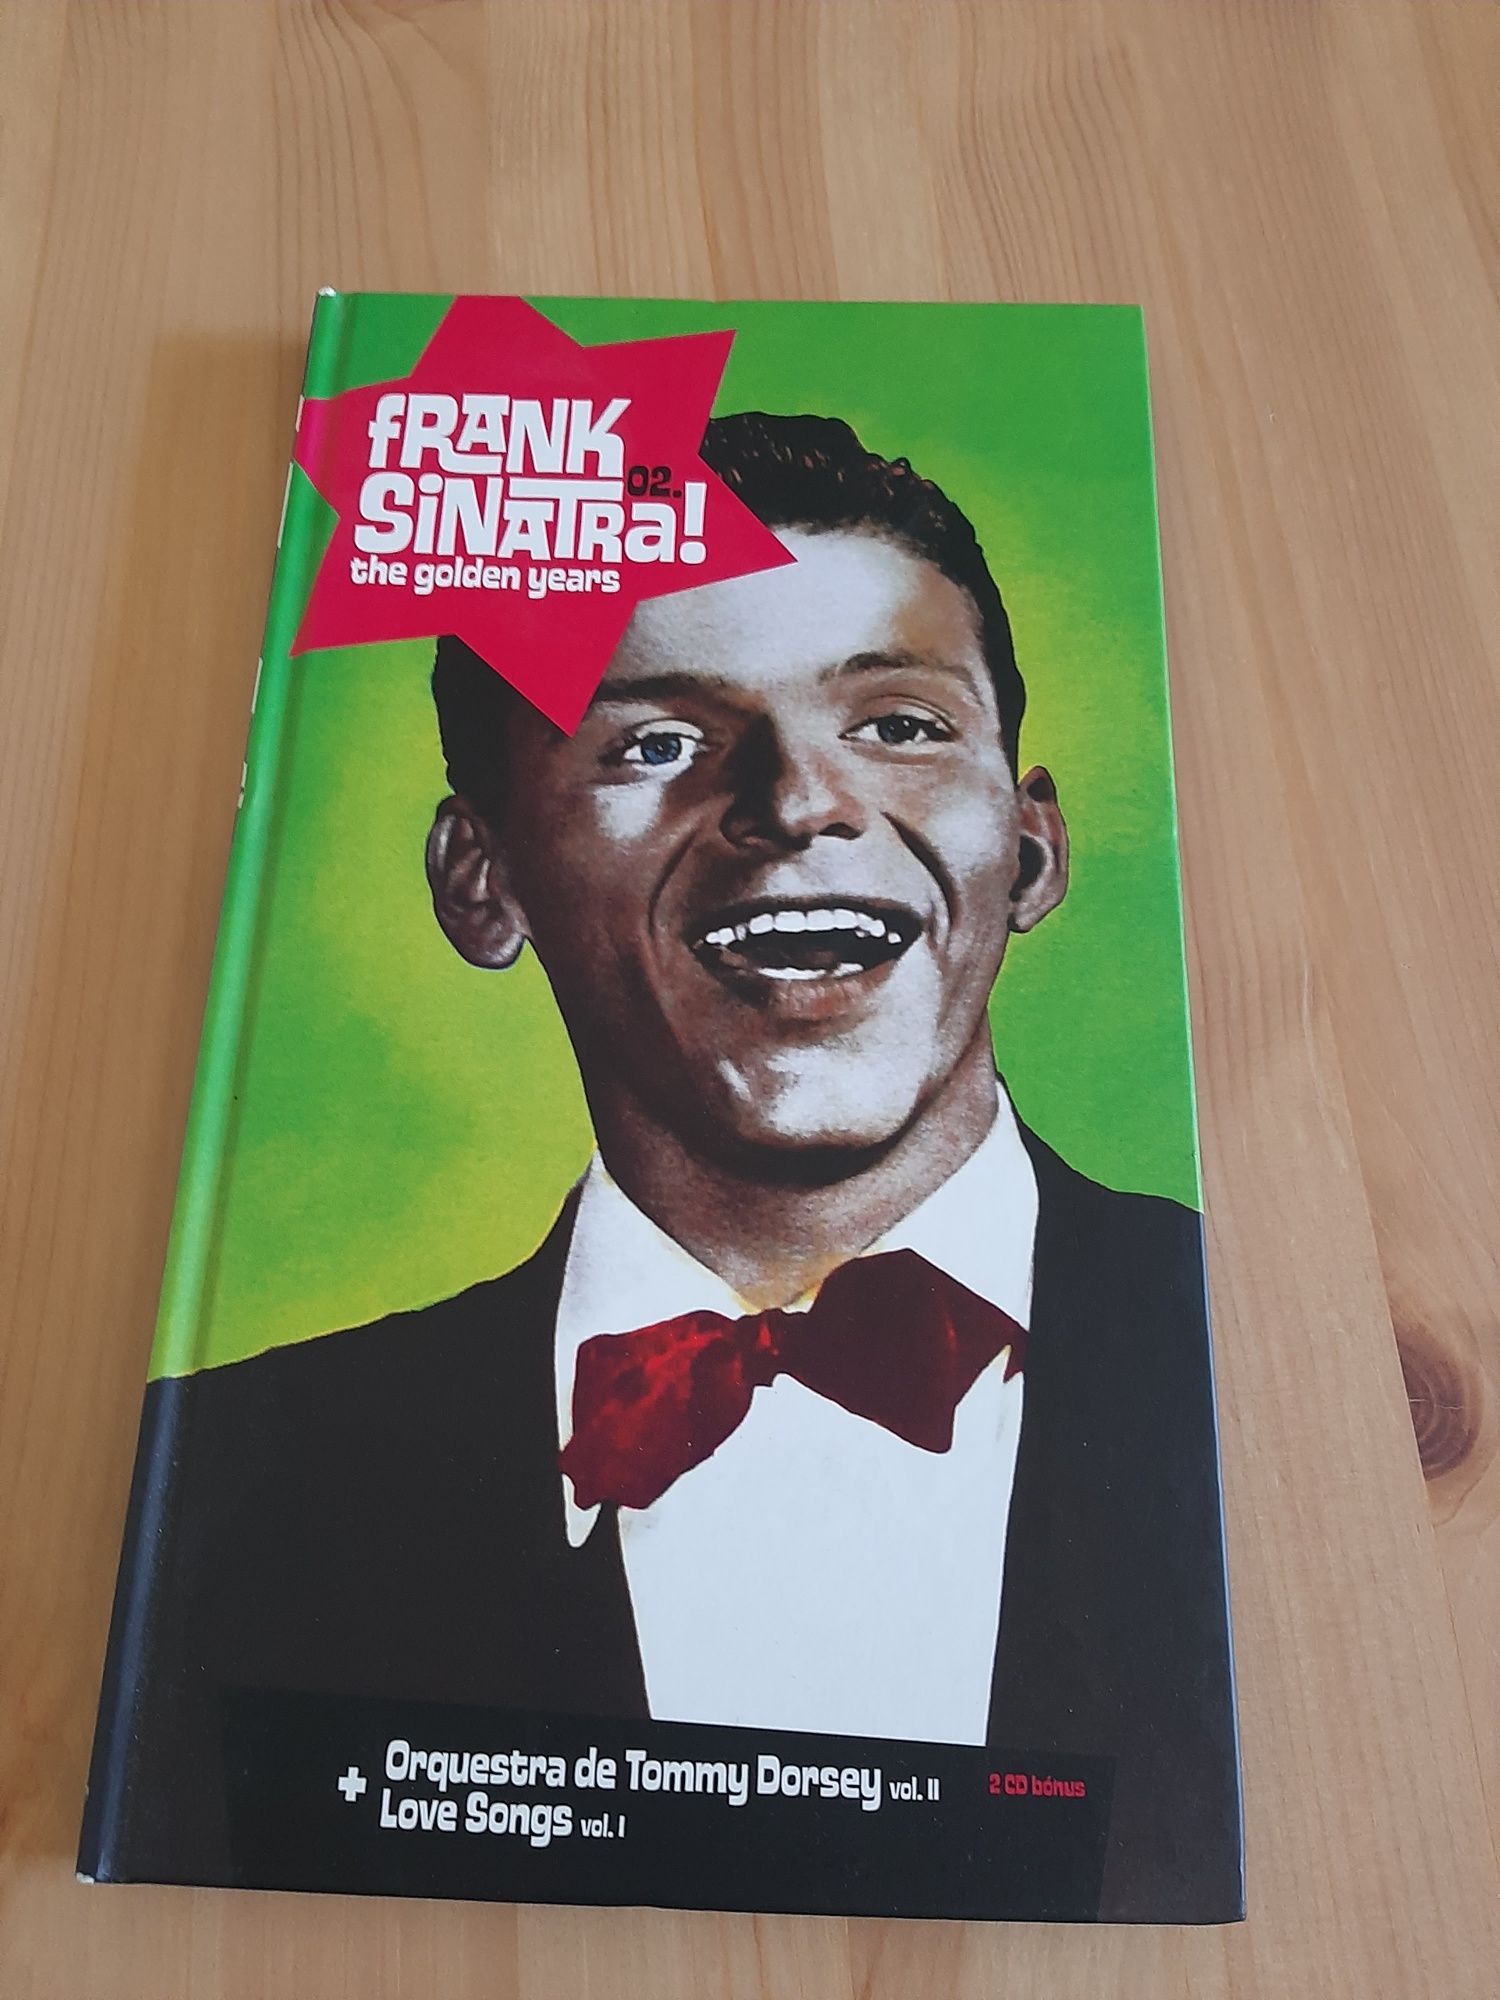 Frank Sinatra - The Golden Years (2 CDs + Livro)